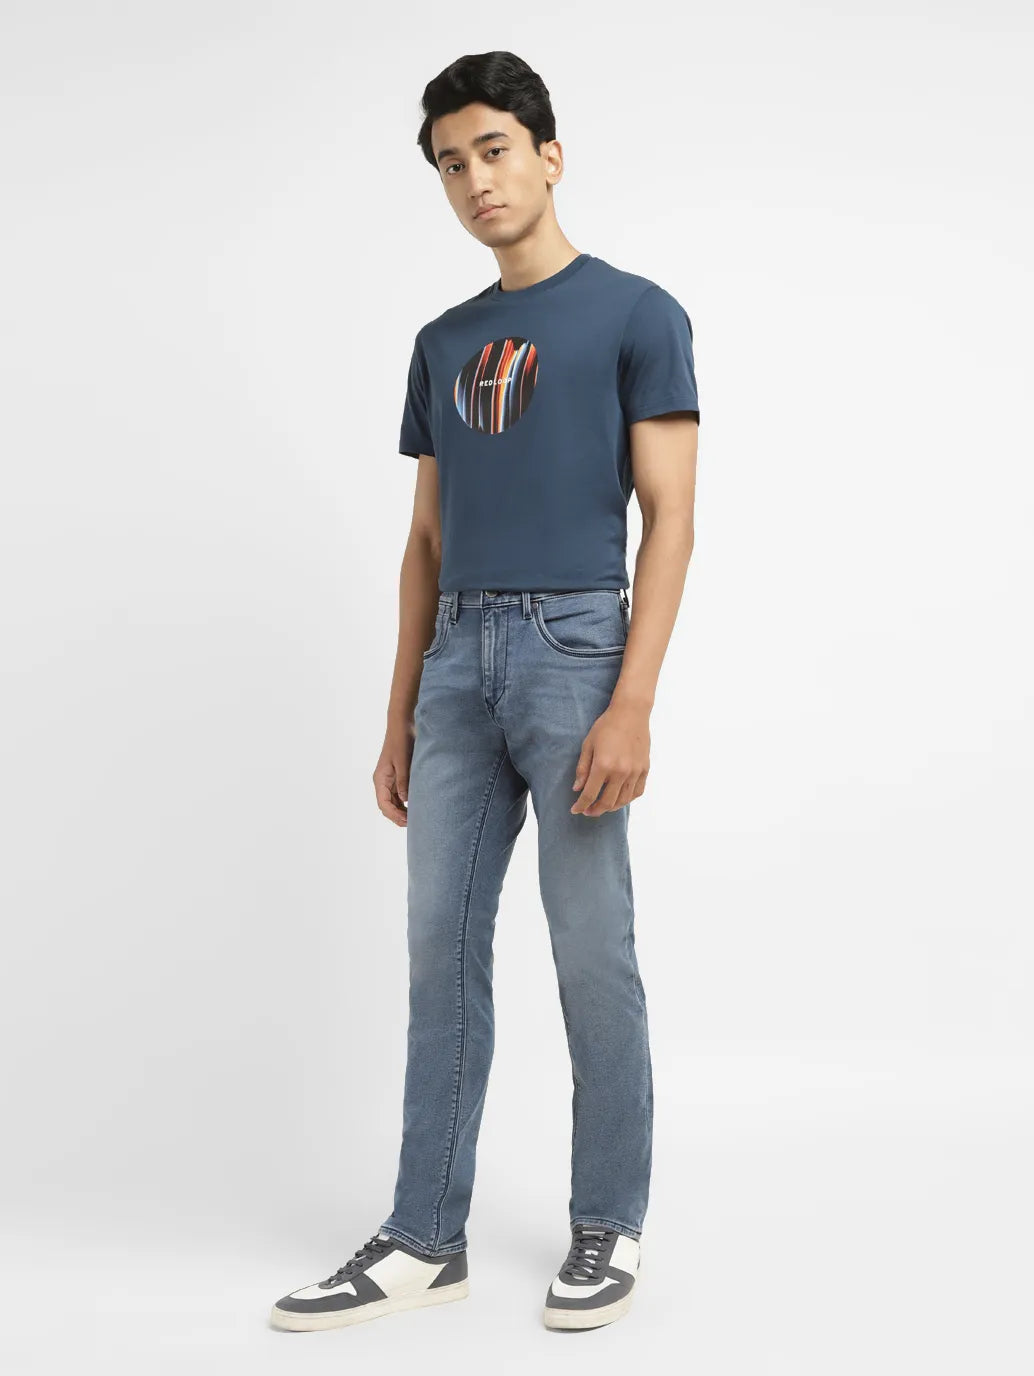 Men's 65504 Mid Indigo Skinny Jeans